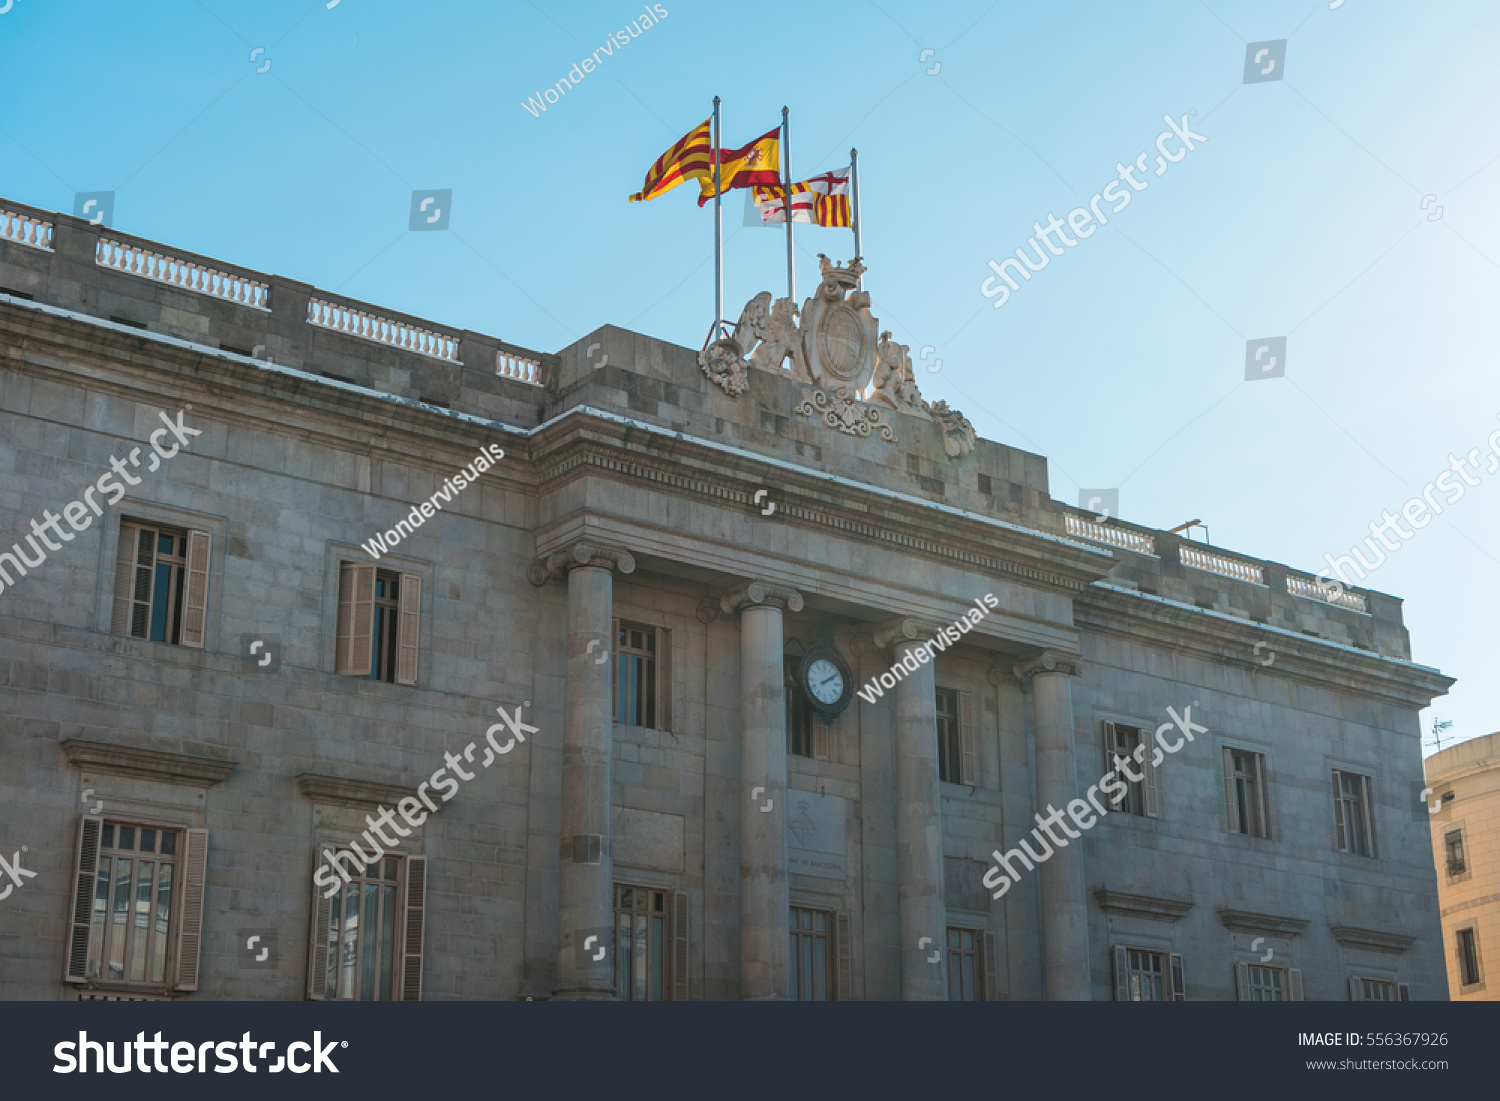 Big Parliament Building Barcelona Spanish Flags Stock Photo 556367926 ...